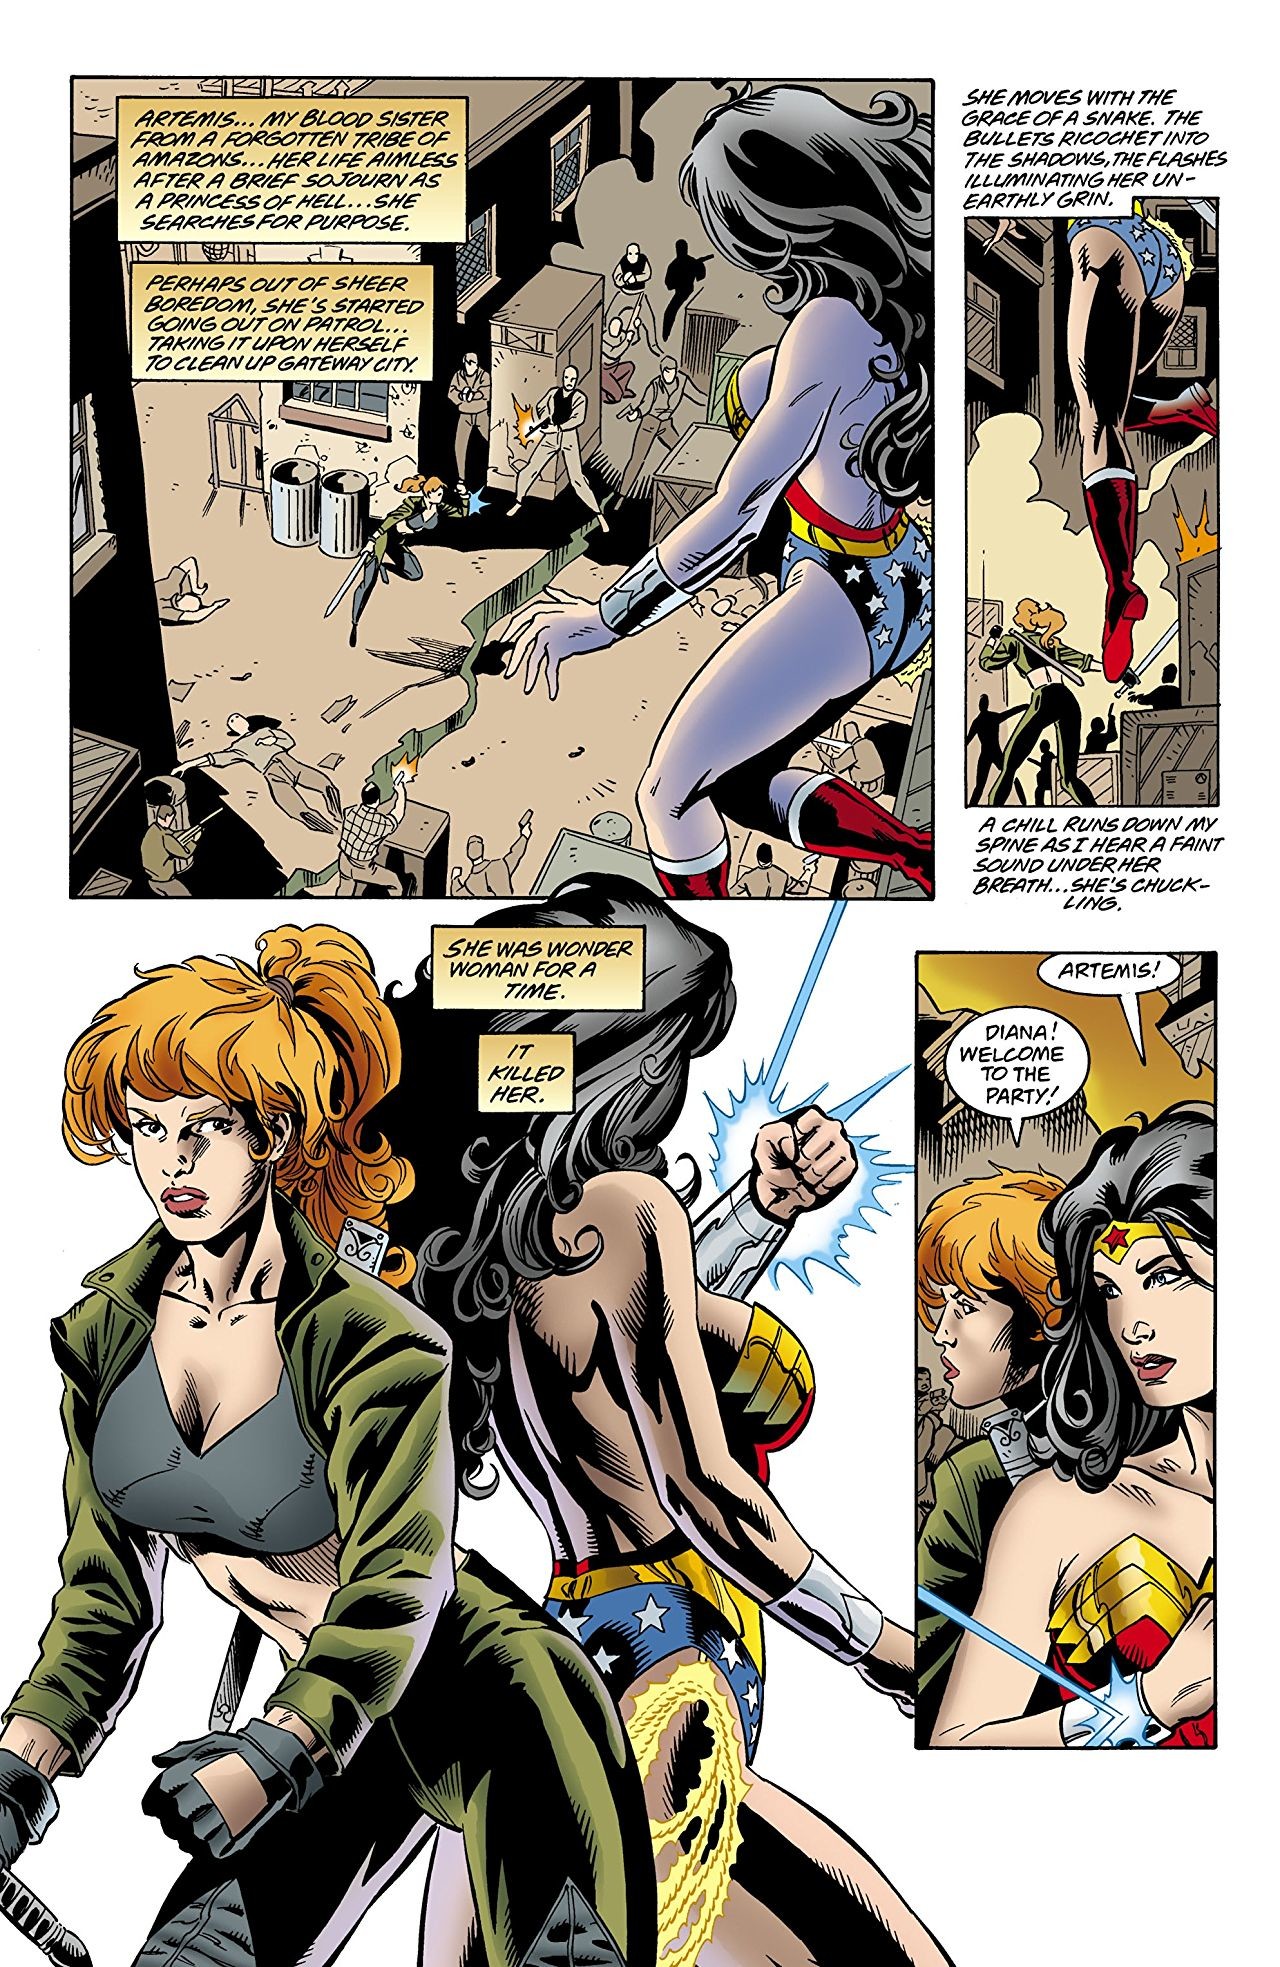 1280x1967 ... DC Comics Presents: Wonder Woman #1 ...